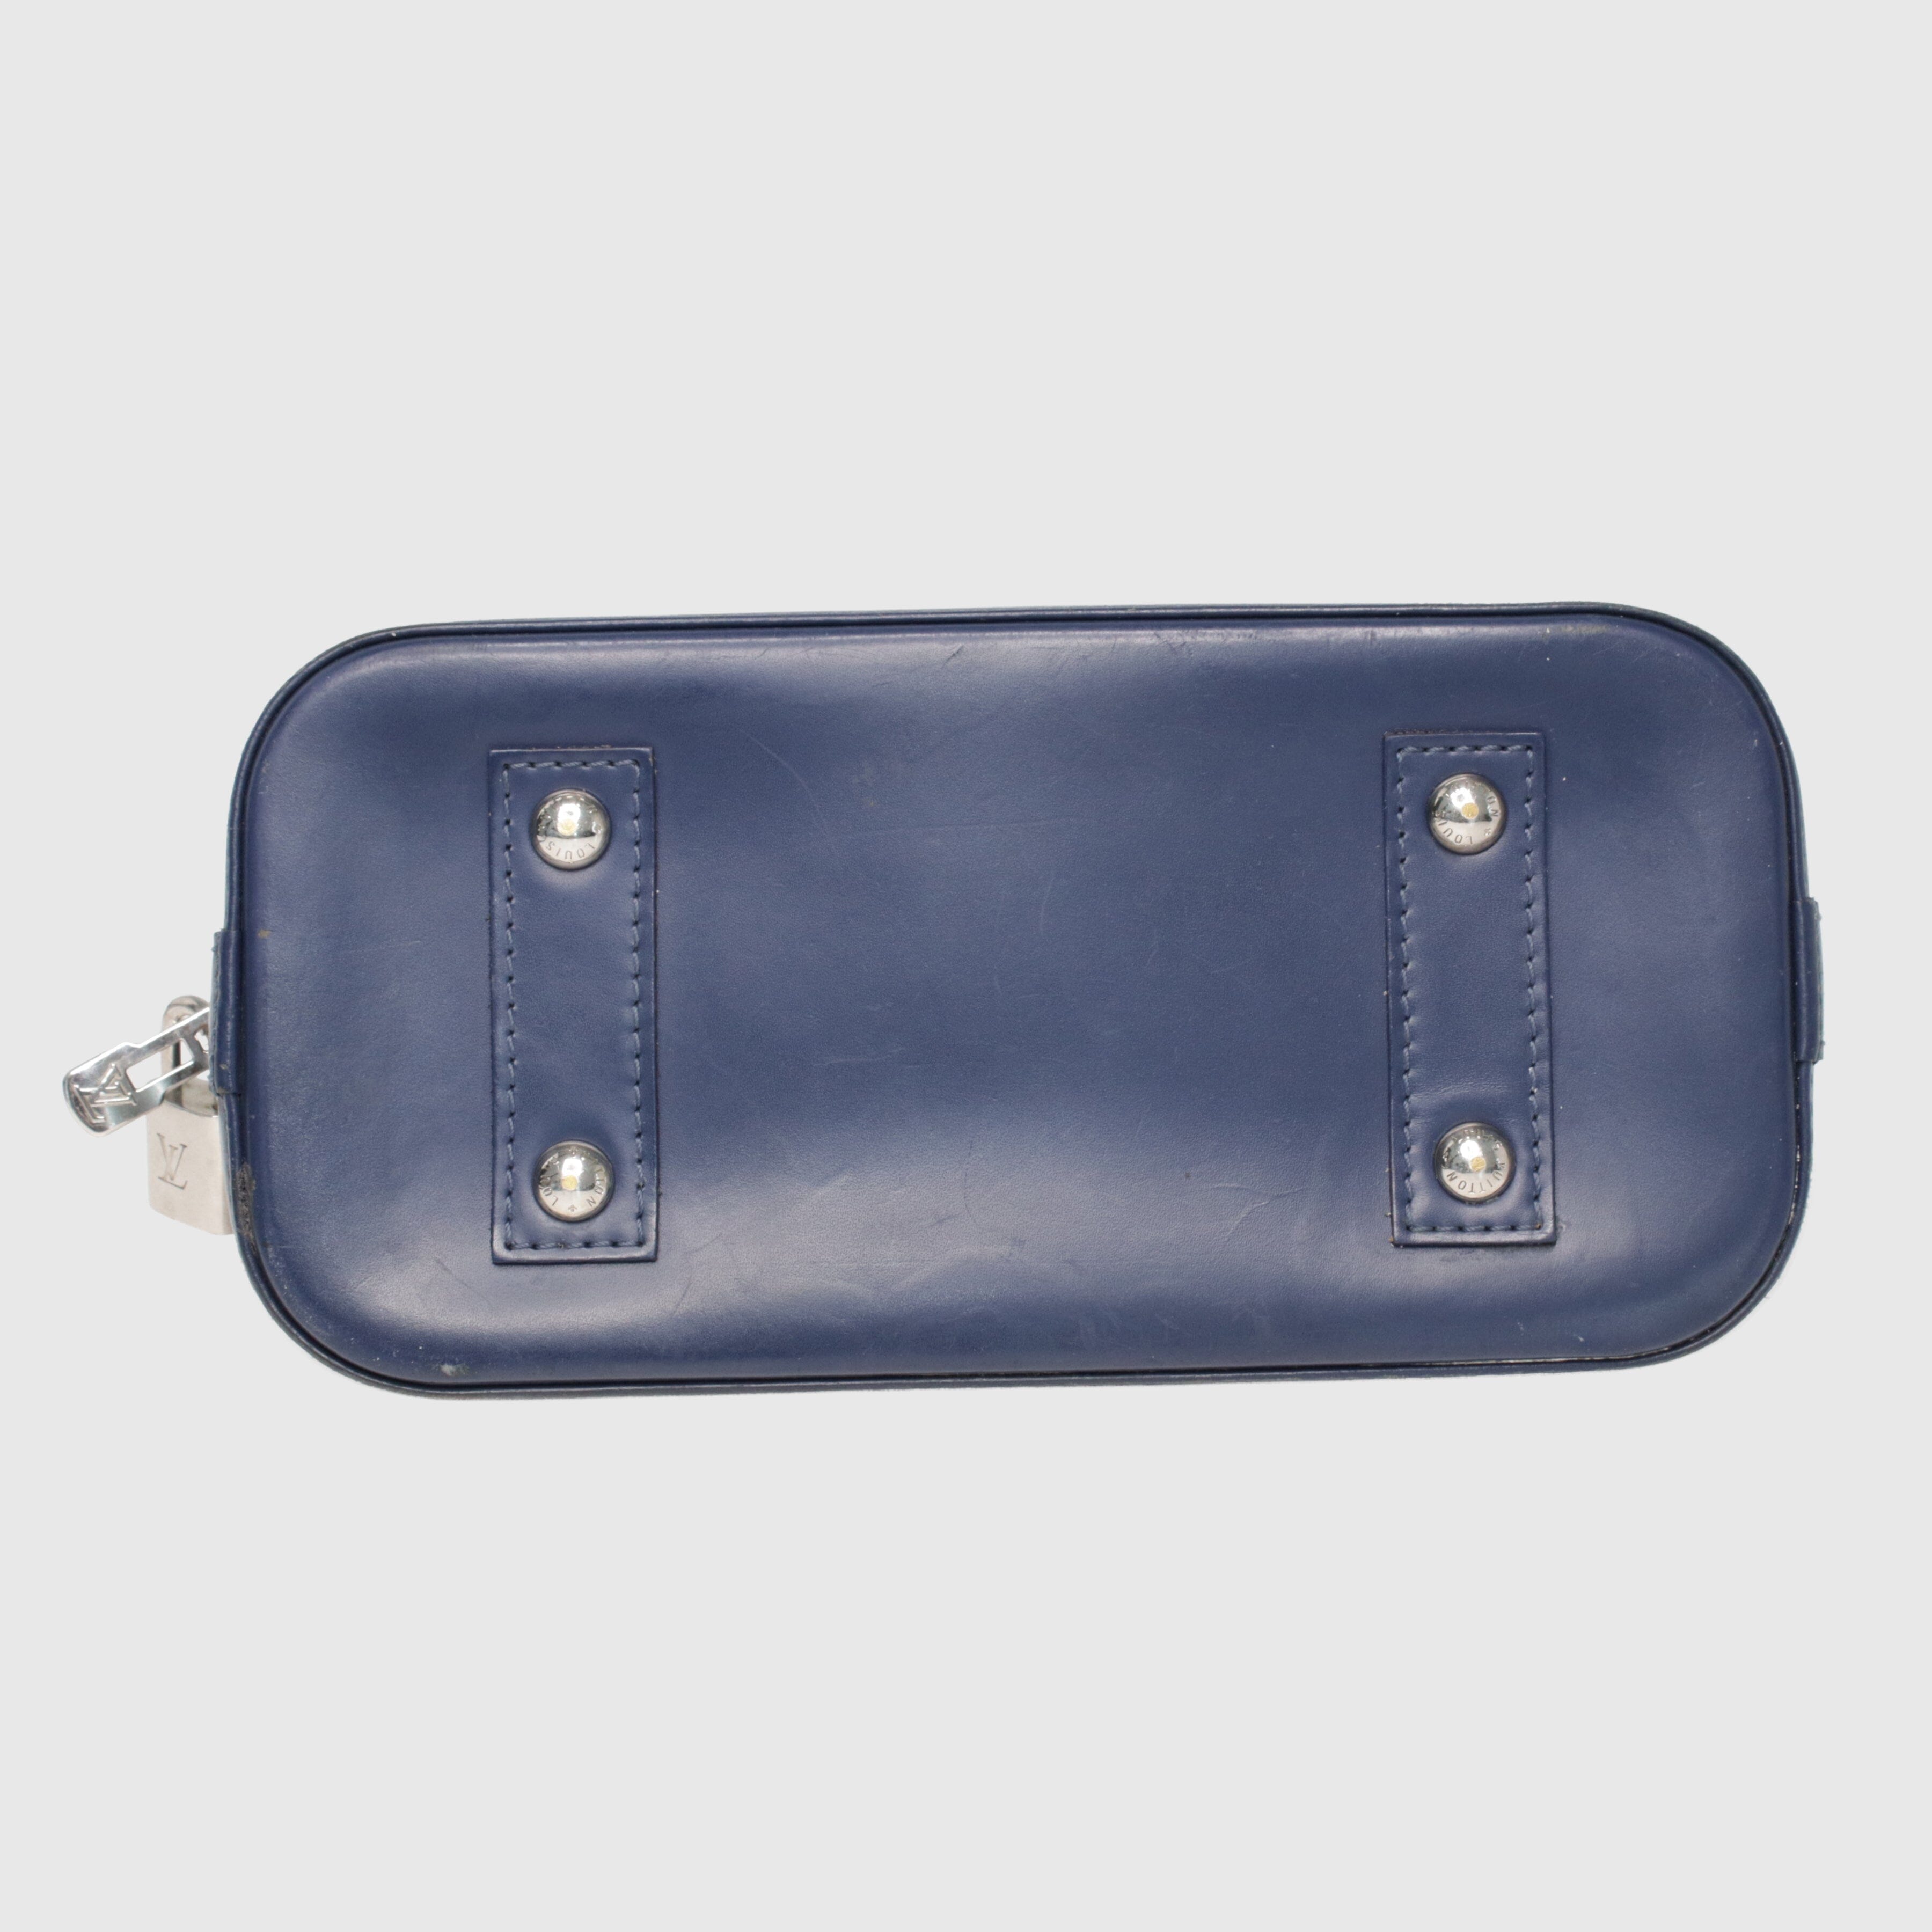 Navy Blue Epi Alma BB Top Handle Bag Bag Louis Vuitton